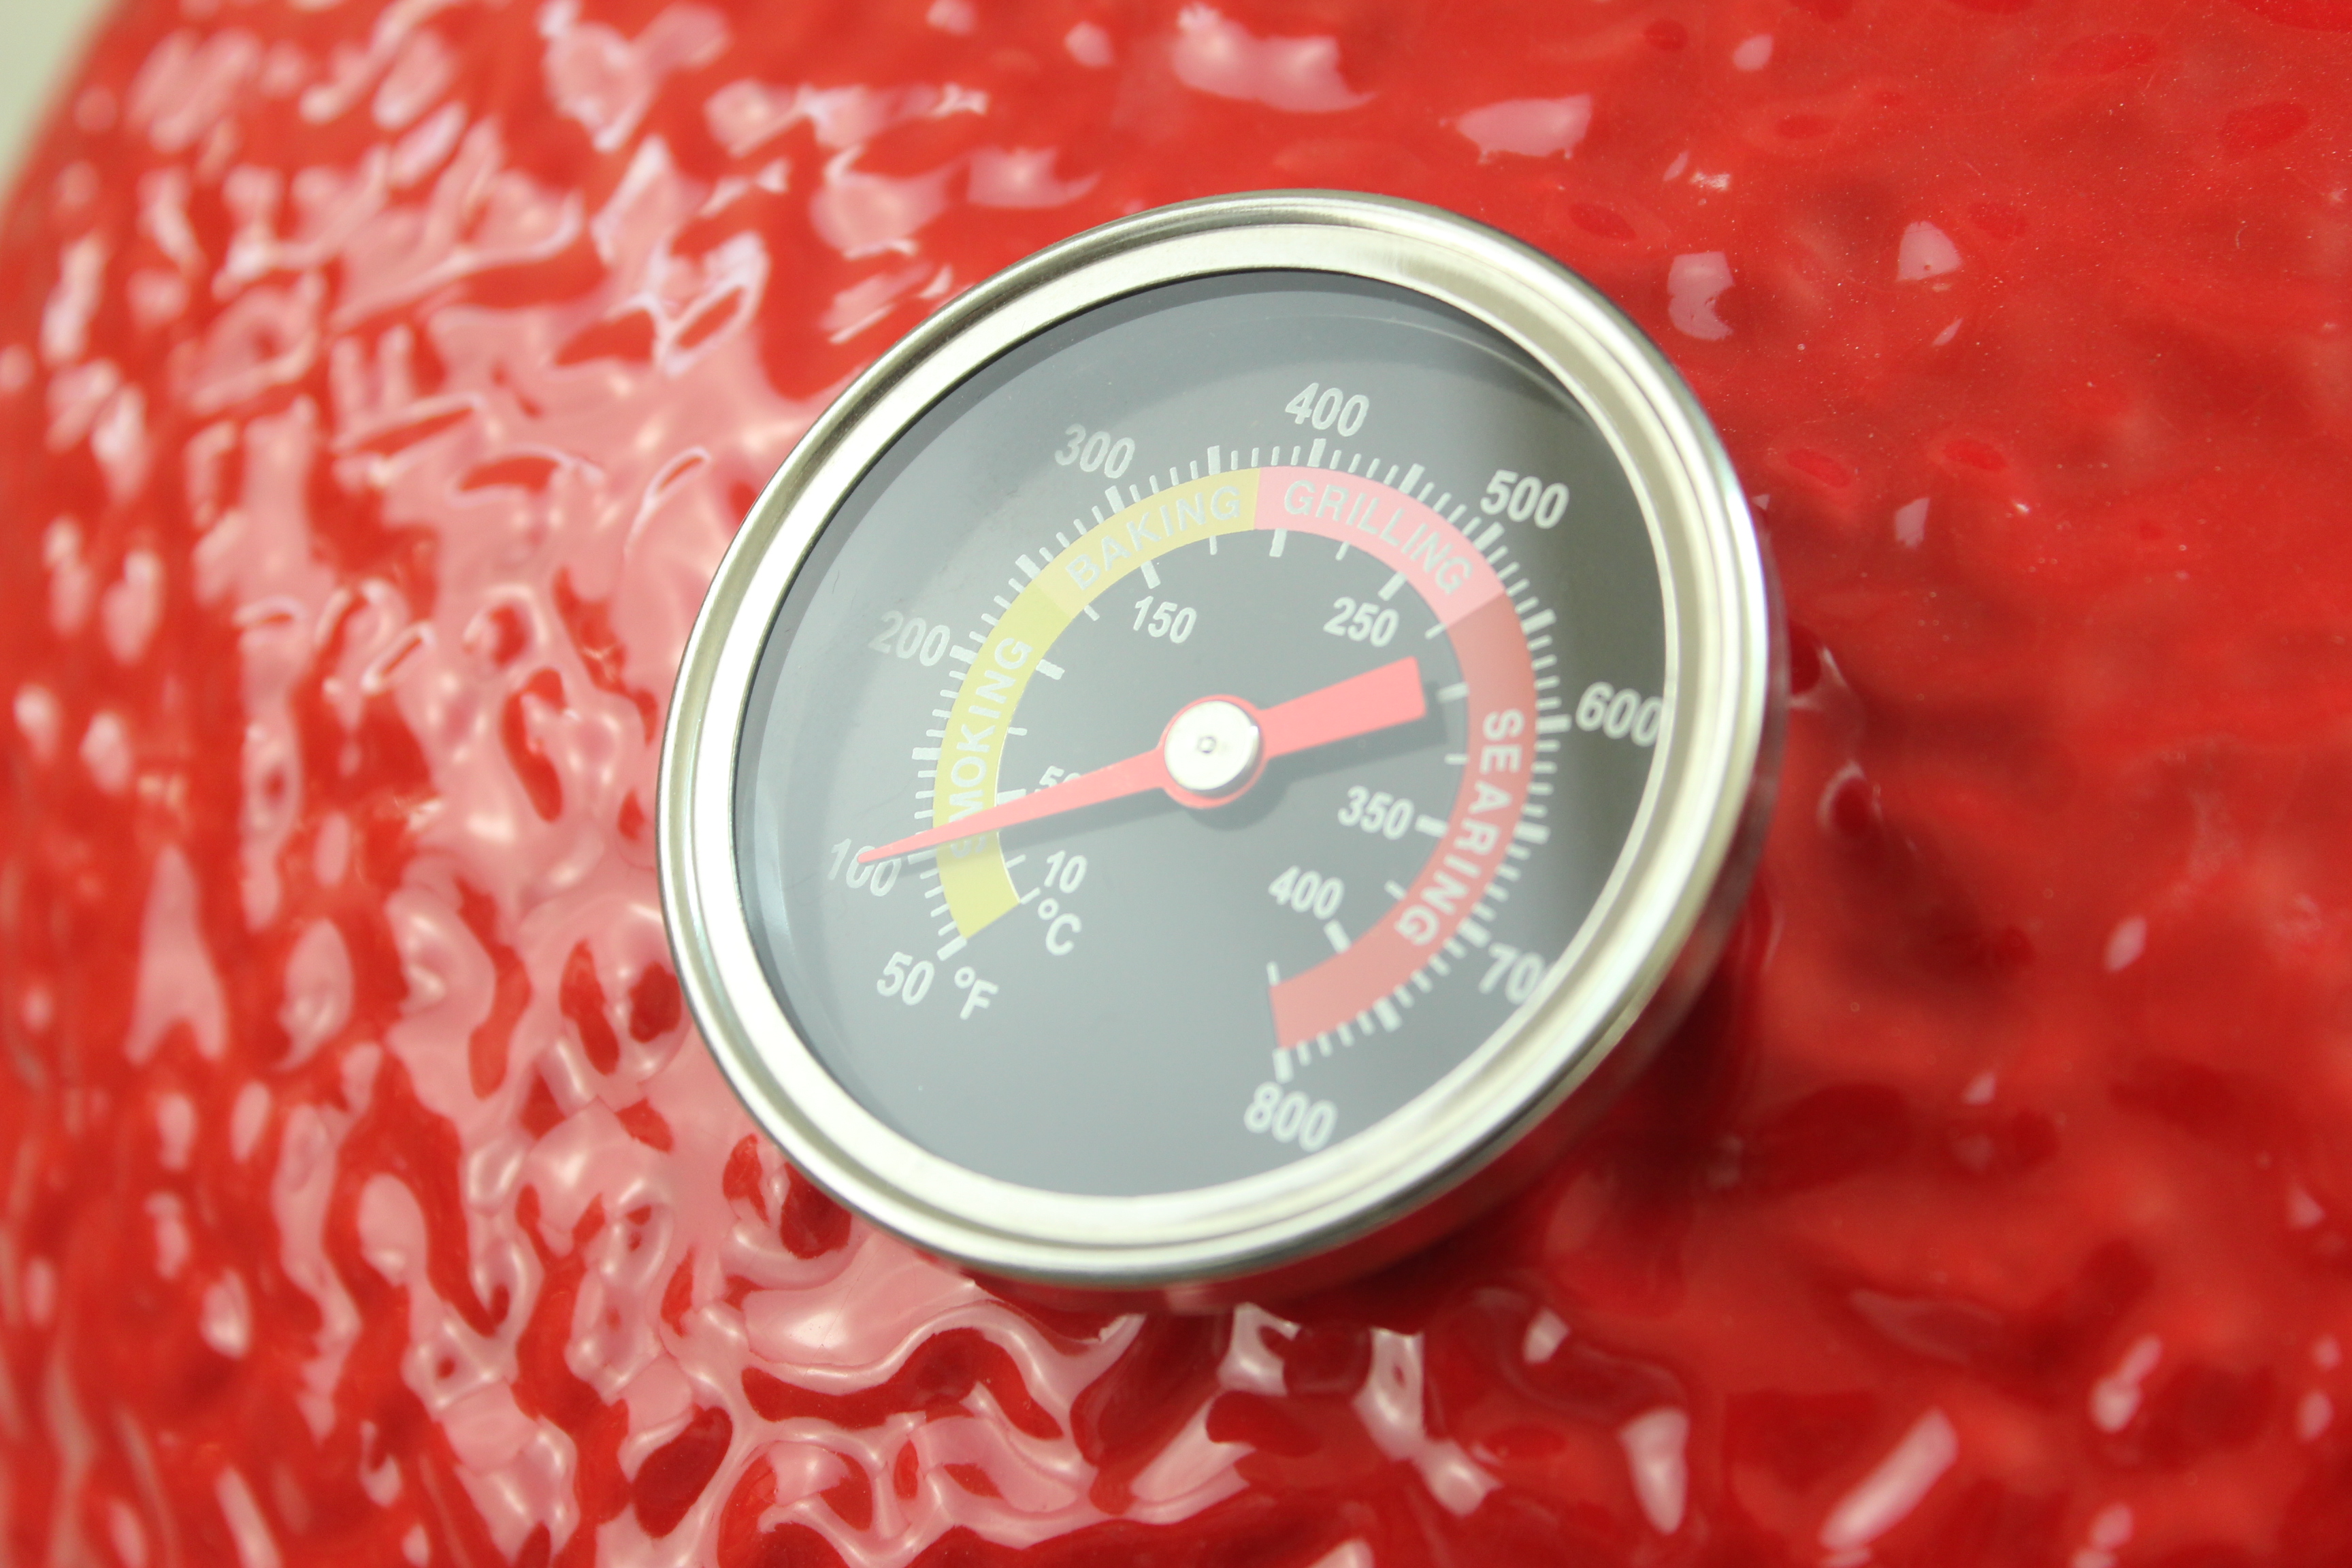 Auplex 16 inch mini size red ceramic bbq grill Featured Image